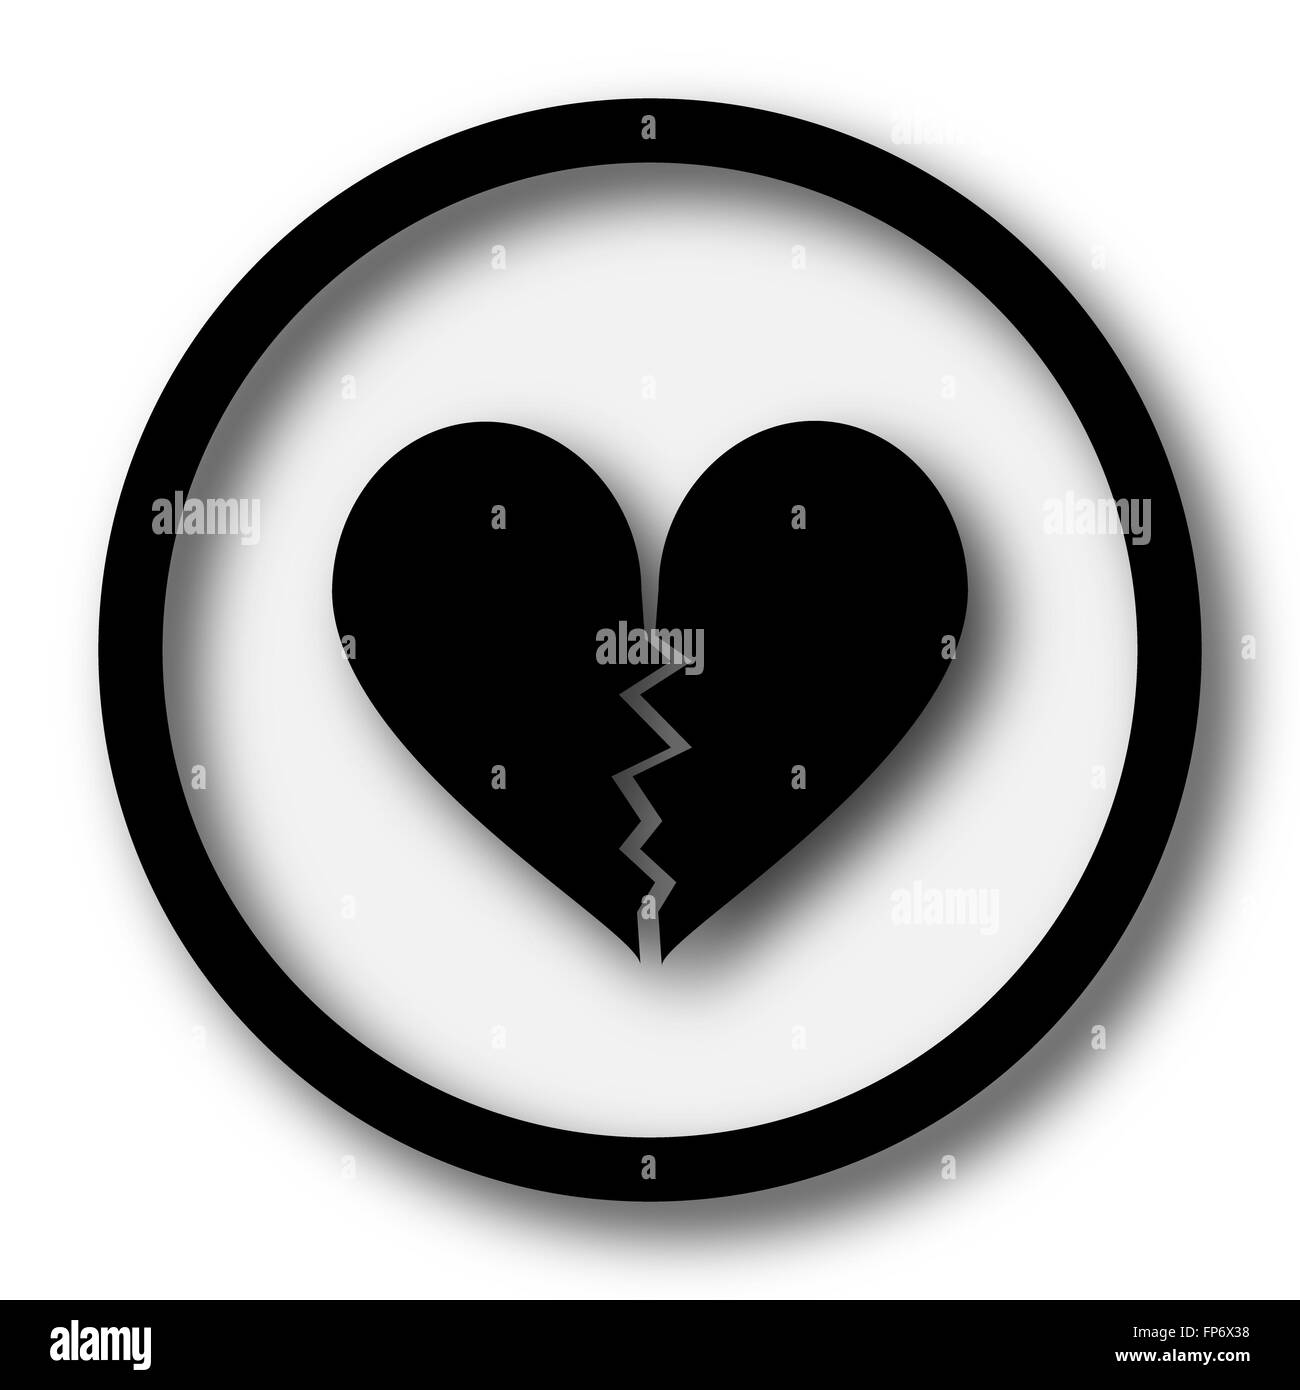 Pin on Heart wallpaper